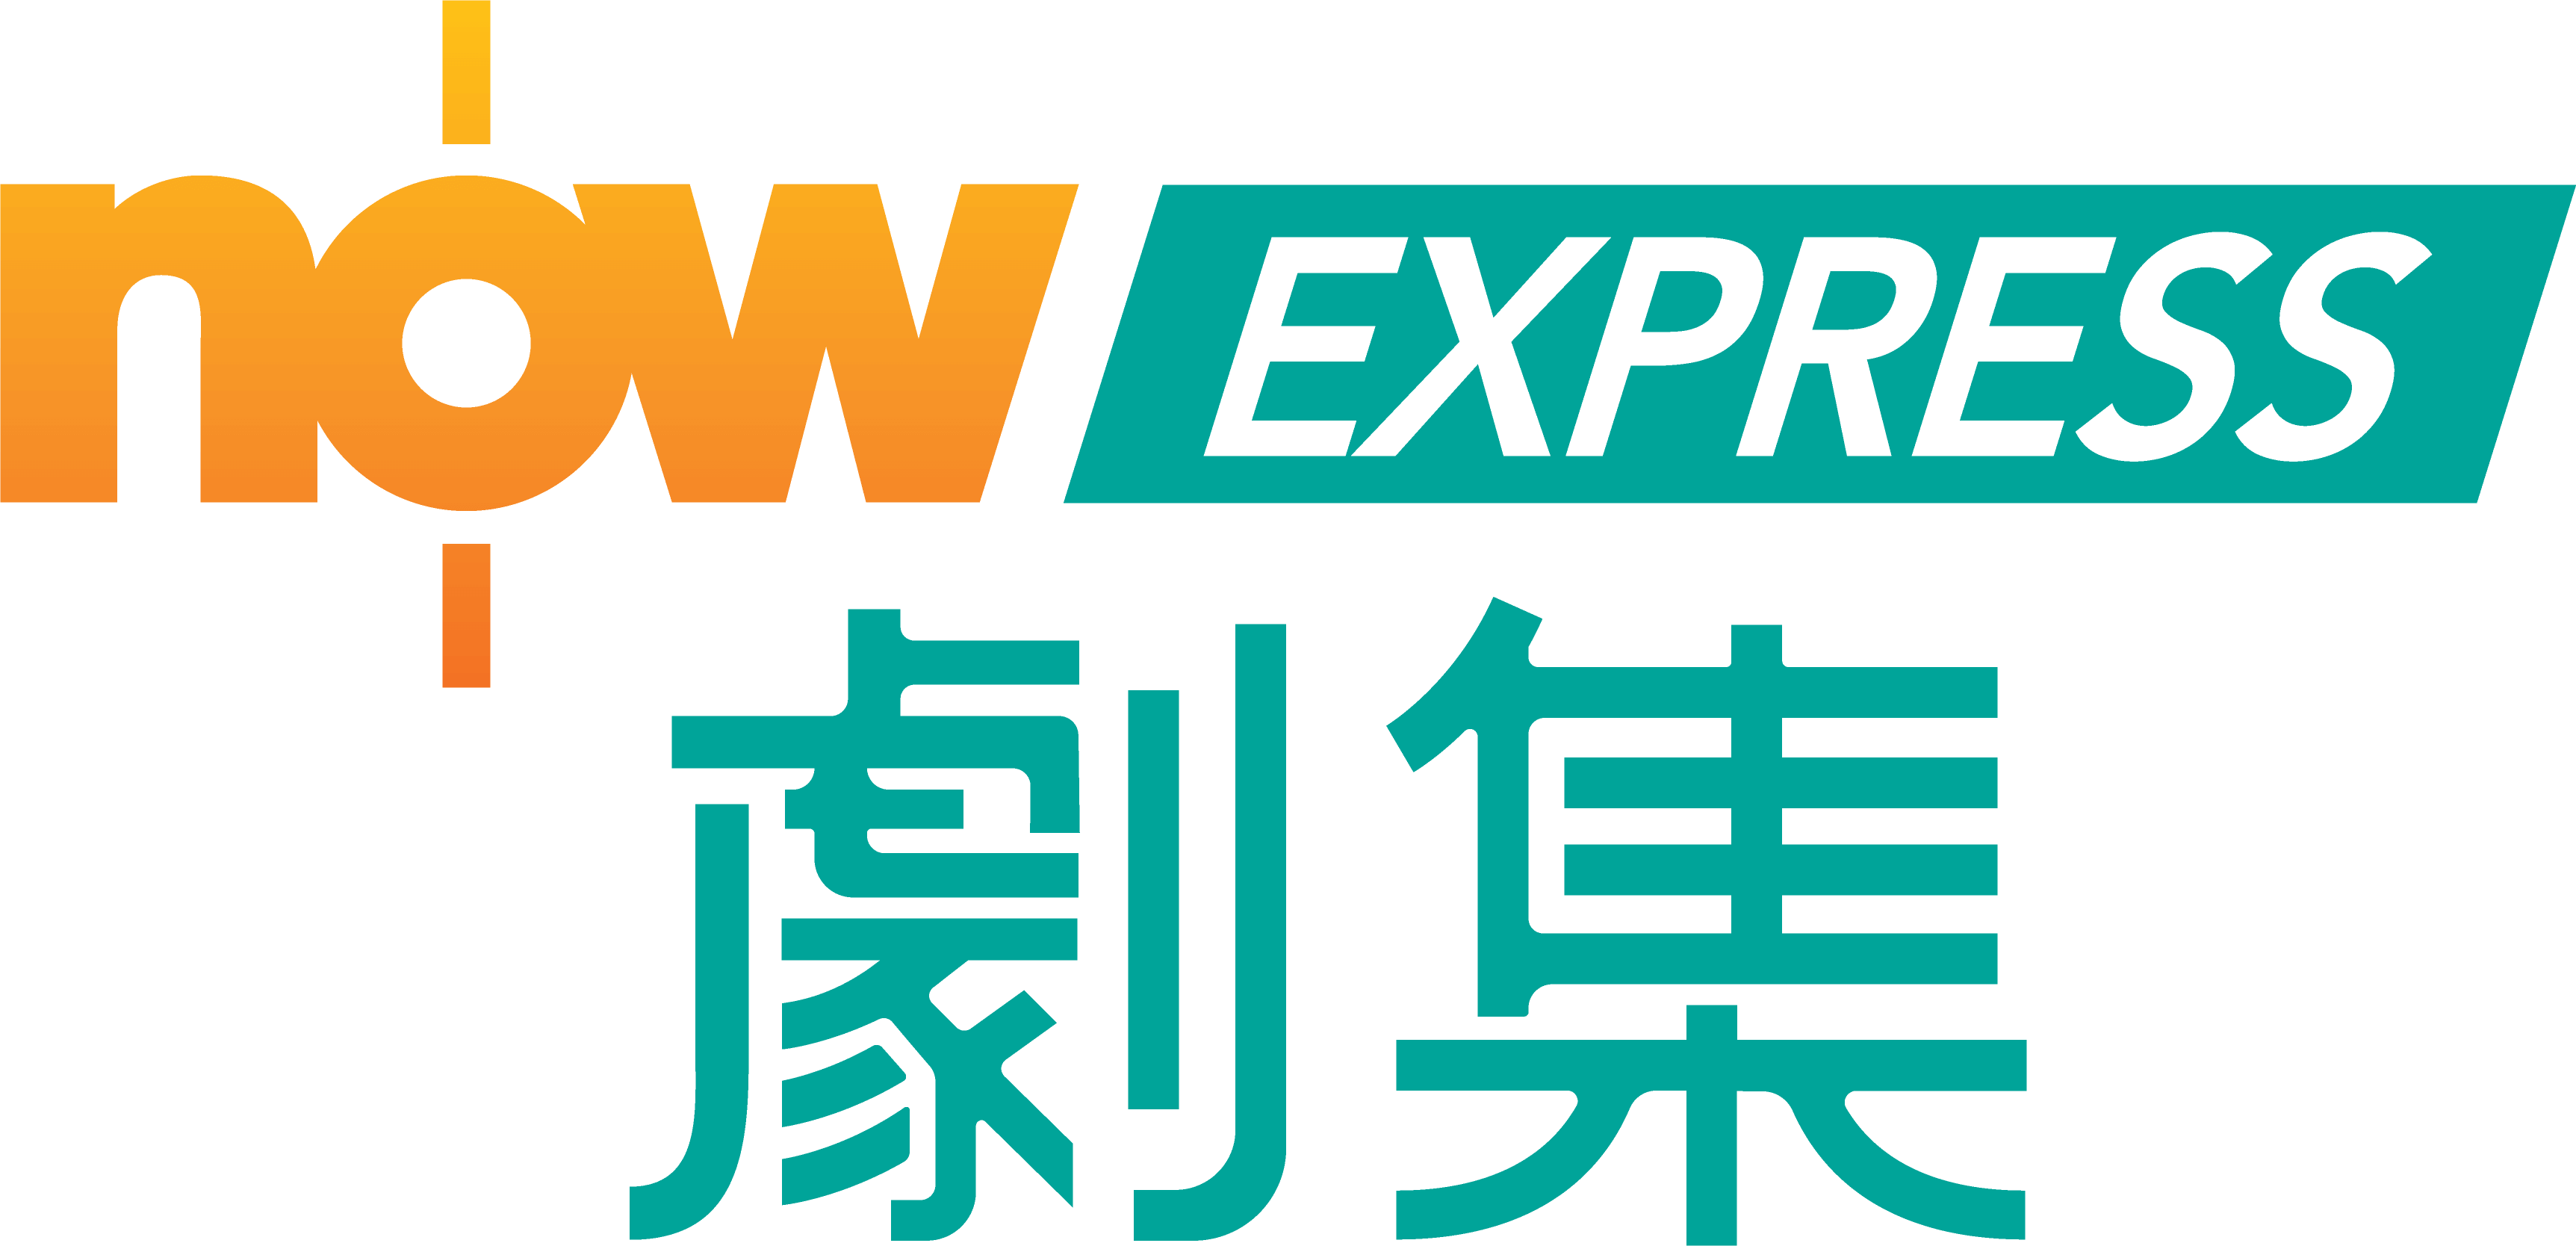 Now劇集Express